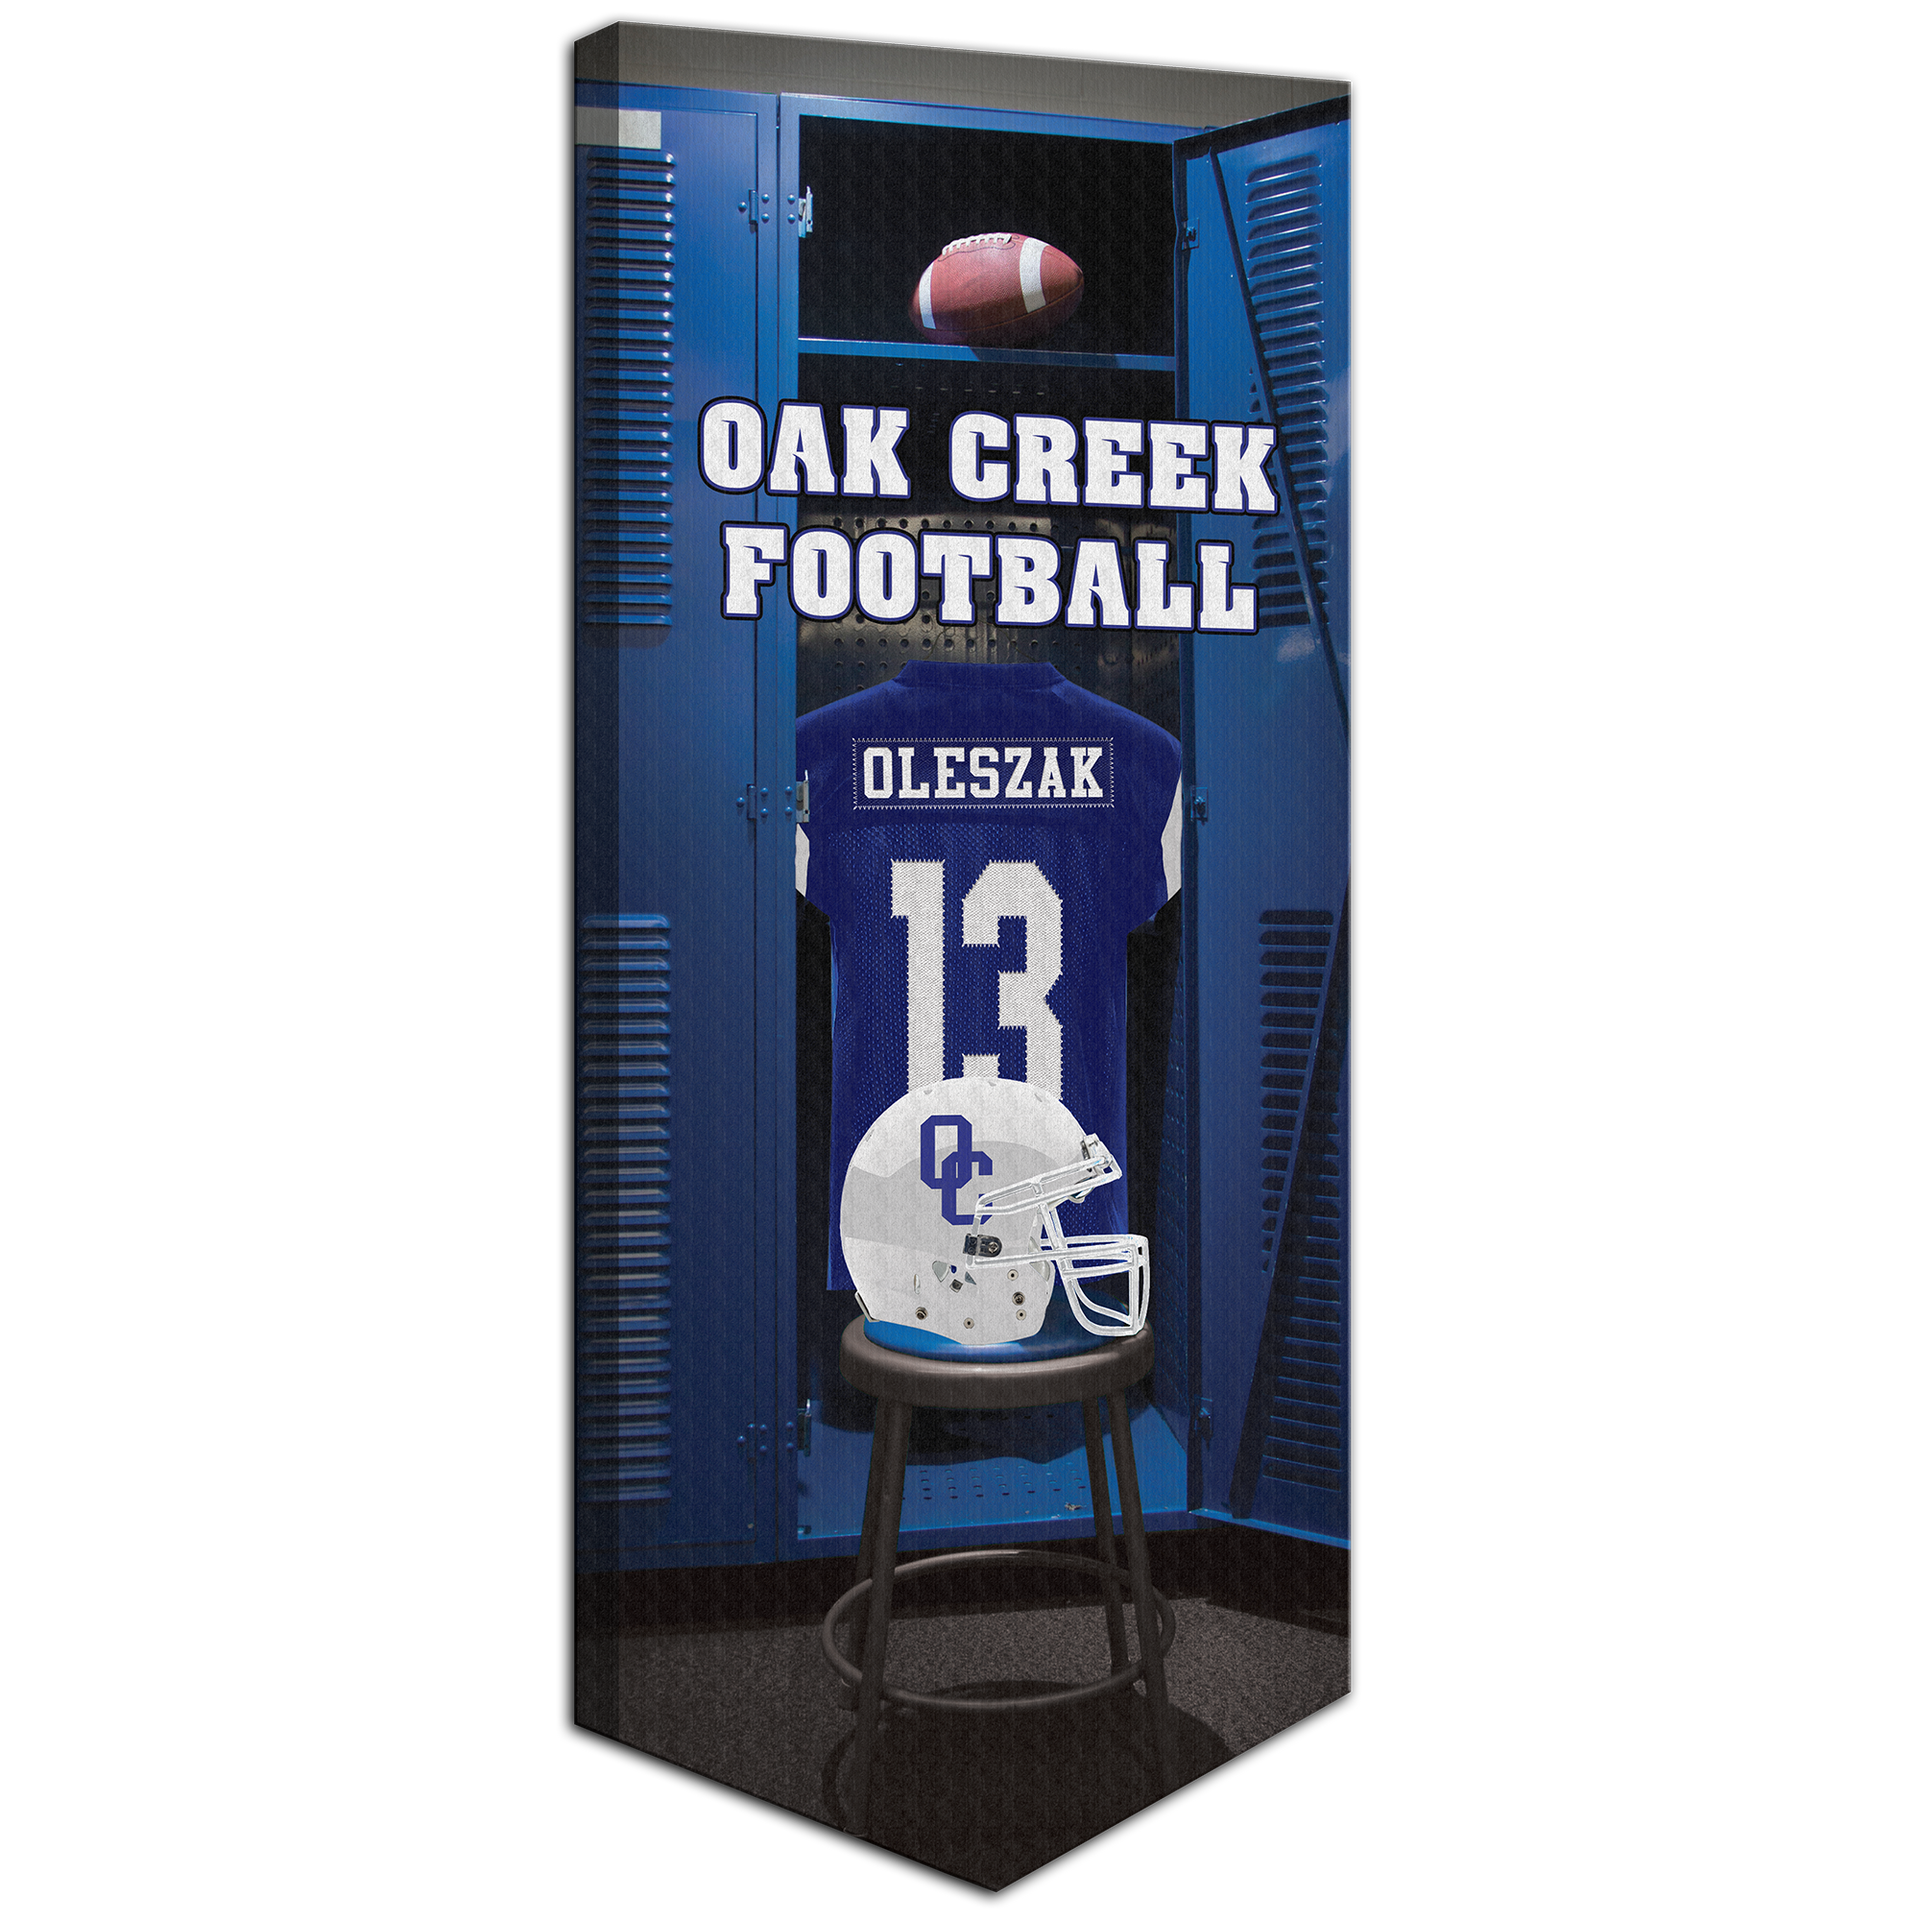 Collectible Canvas Football Locker room Banner for Oak Creek High School